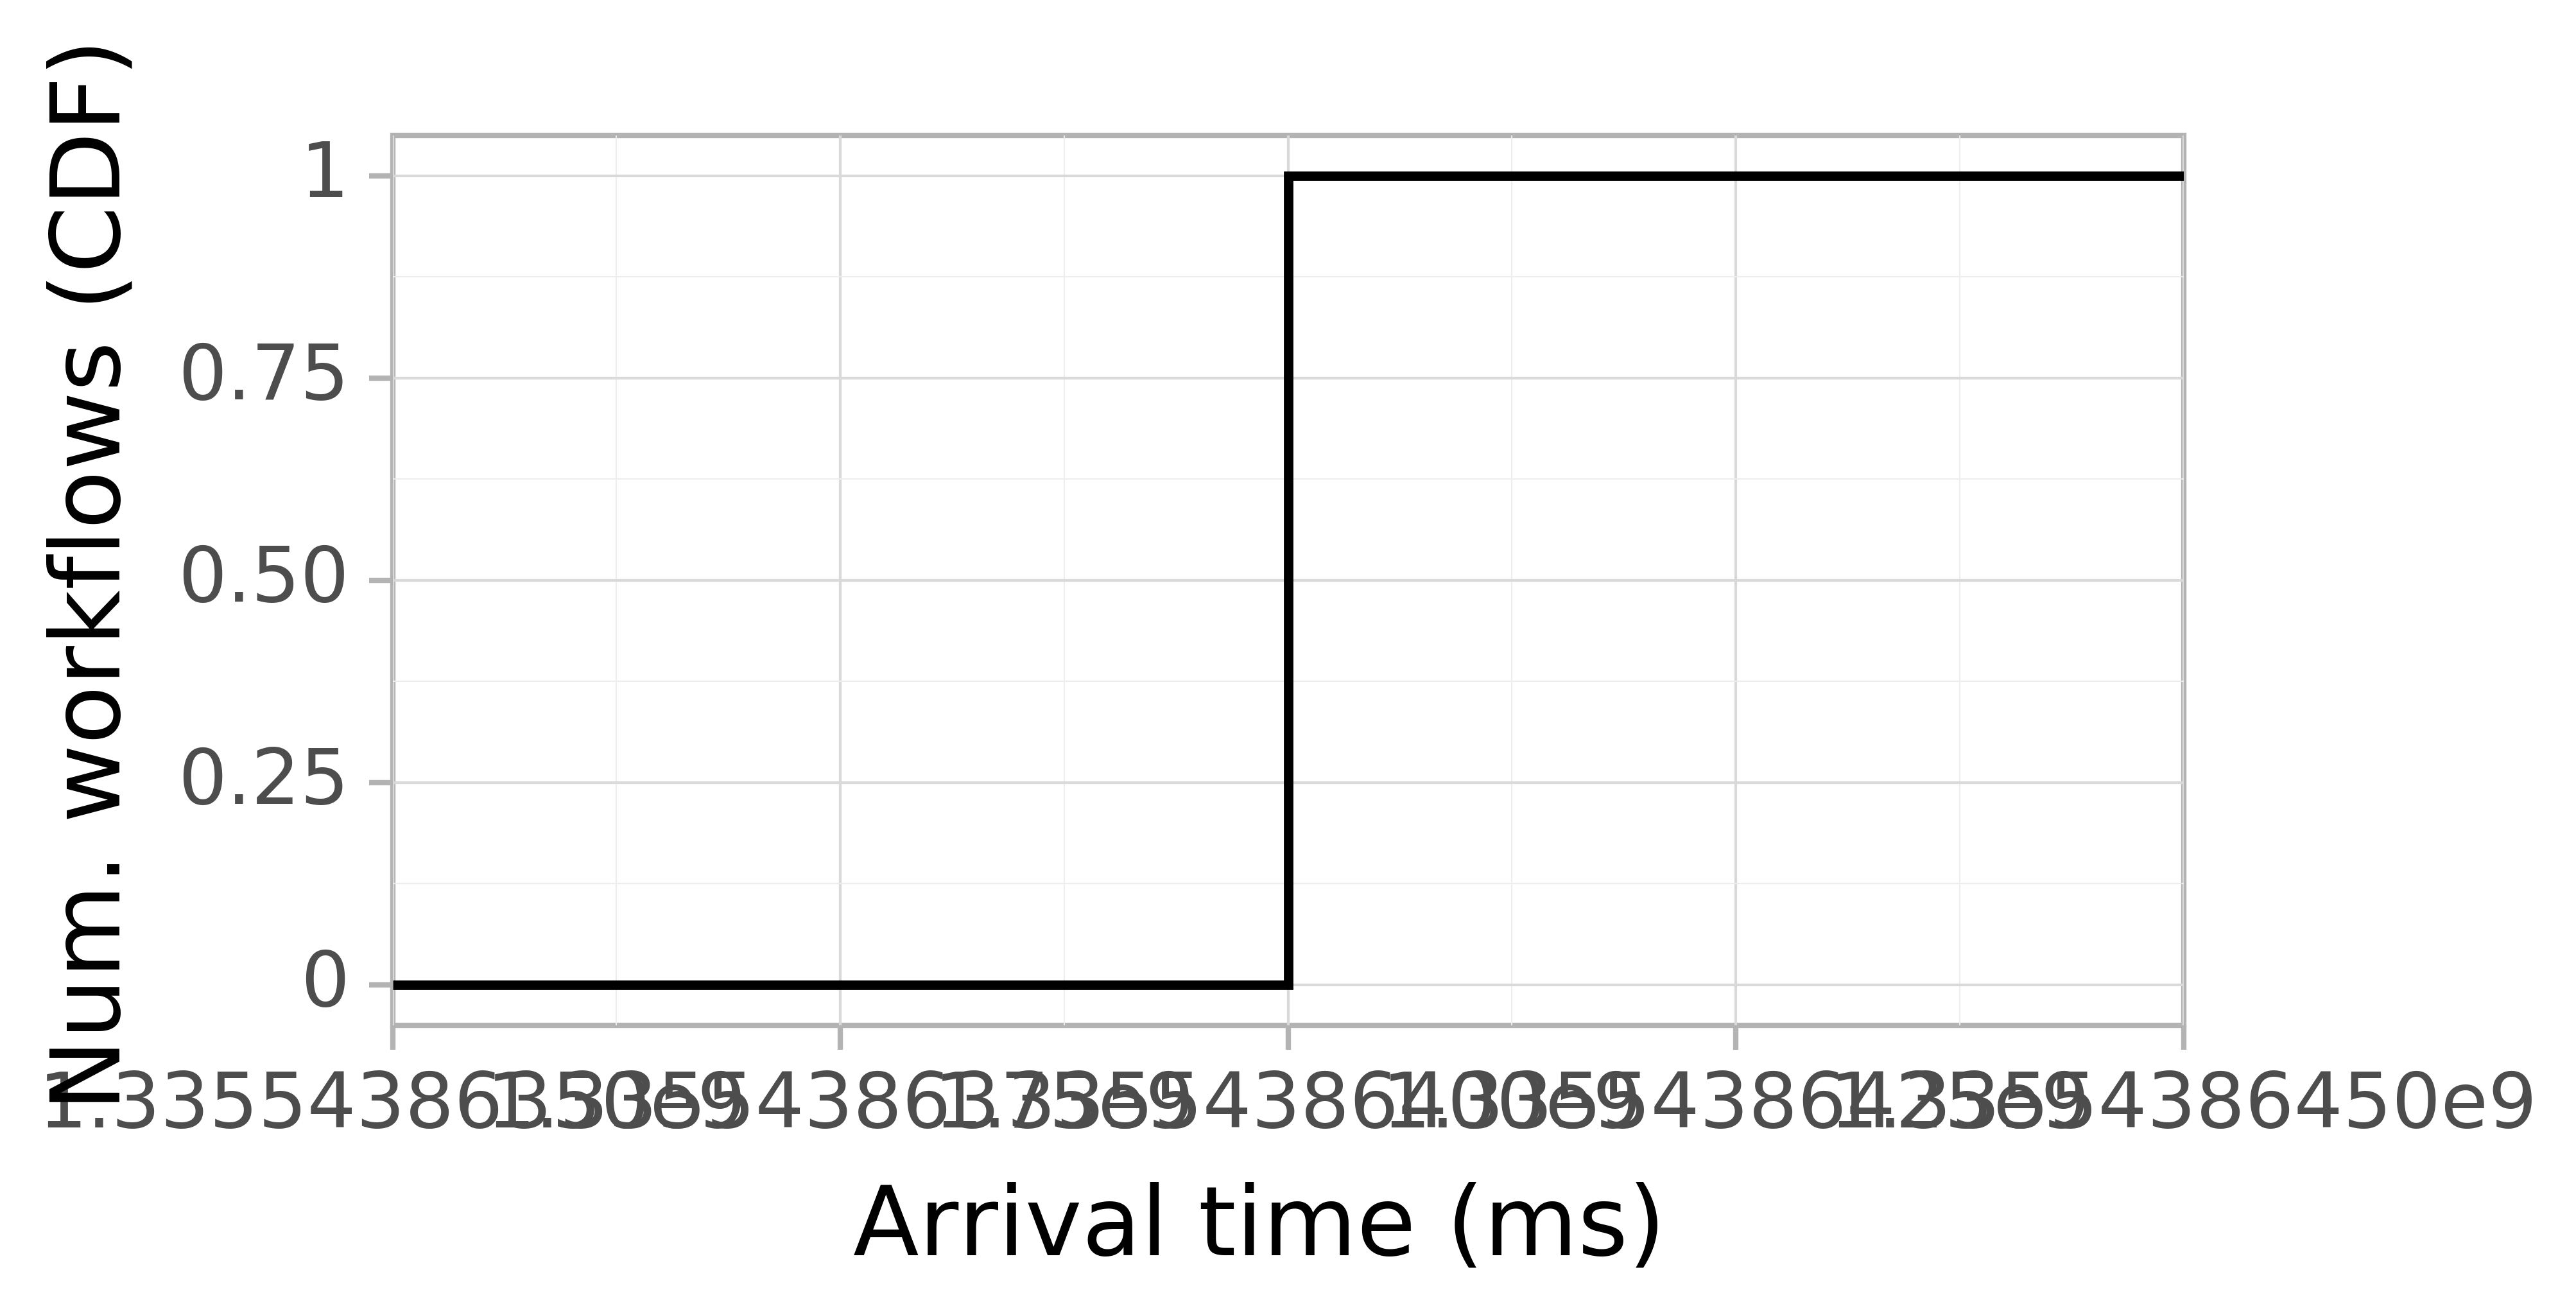 Job arrival CDF graph for the Pegasus_P5 trace.